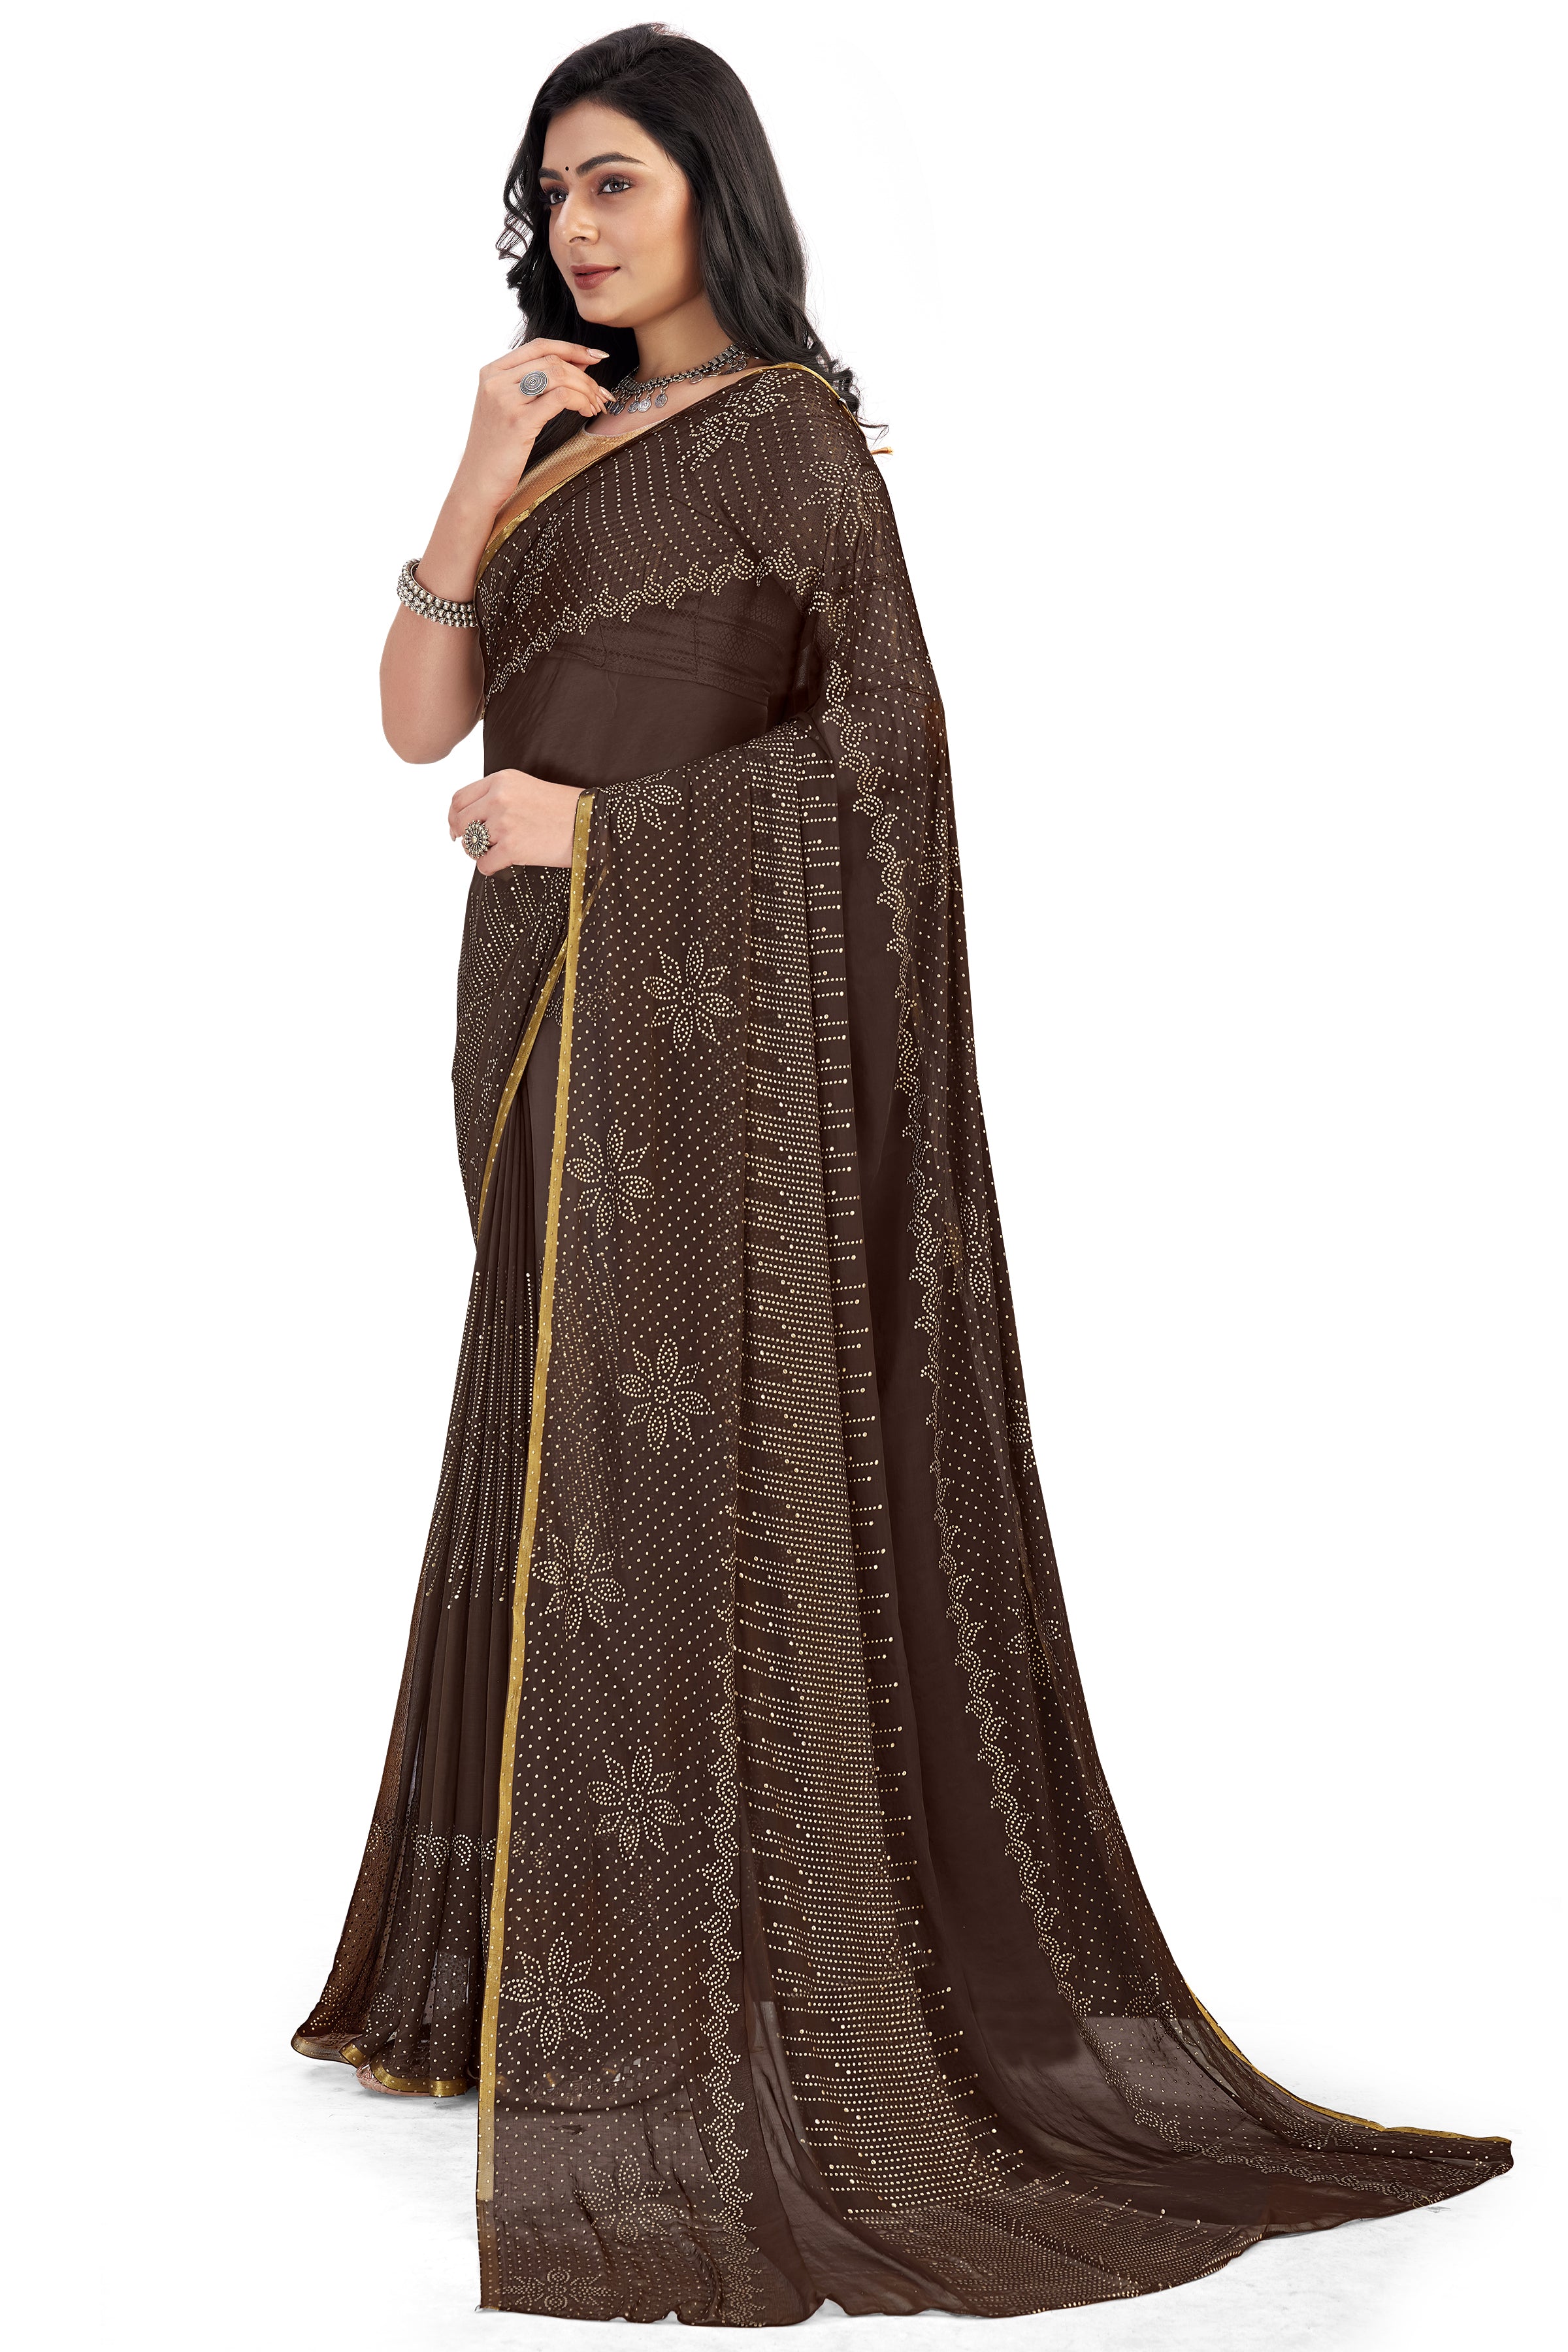 Women's Bandhani Daily Wear Chiffon Sari With Blouse Piece (Coffee Brown) - NIMIDHYA